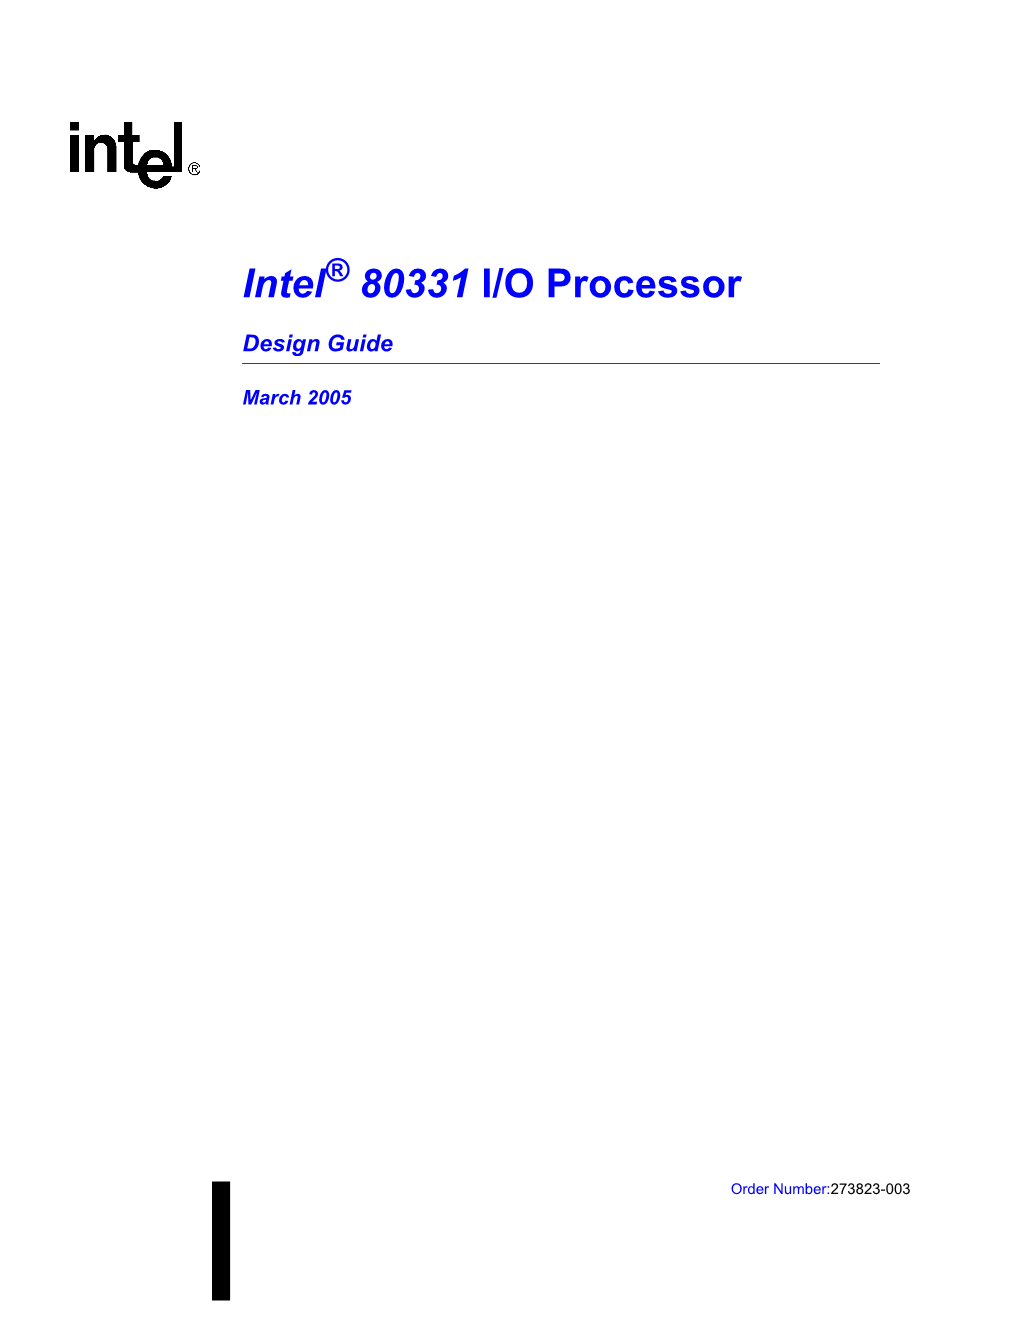 Intel® 80331 I/O Processor Design Guide Contents